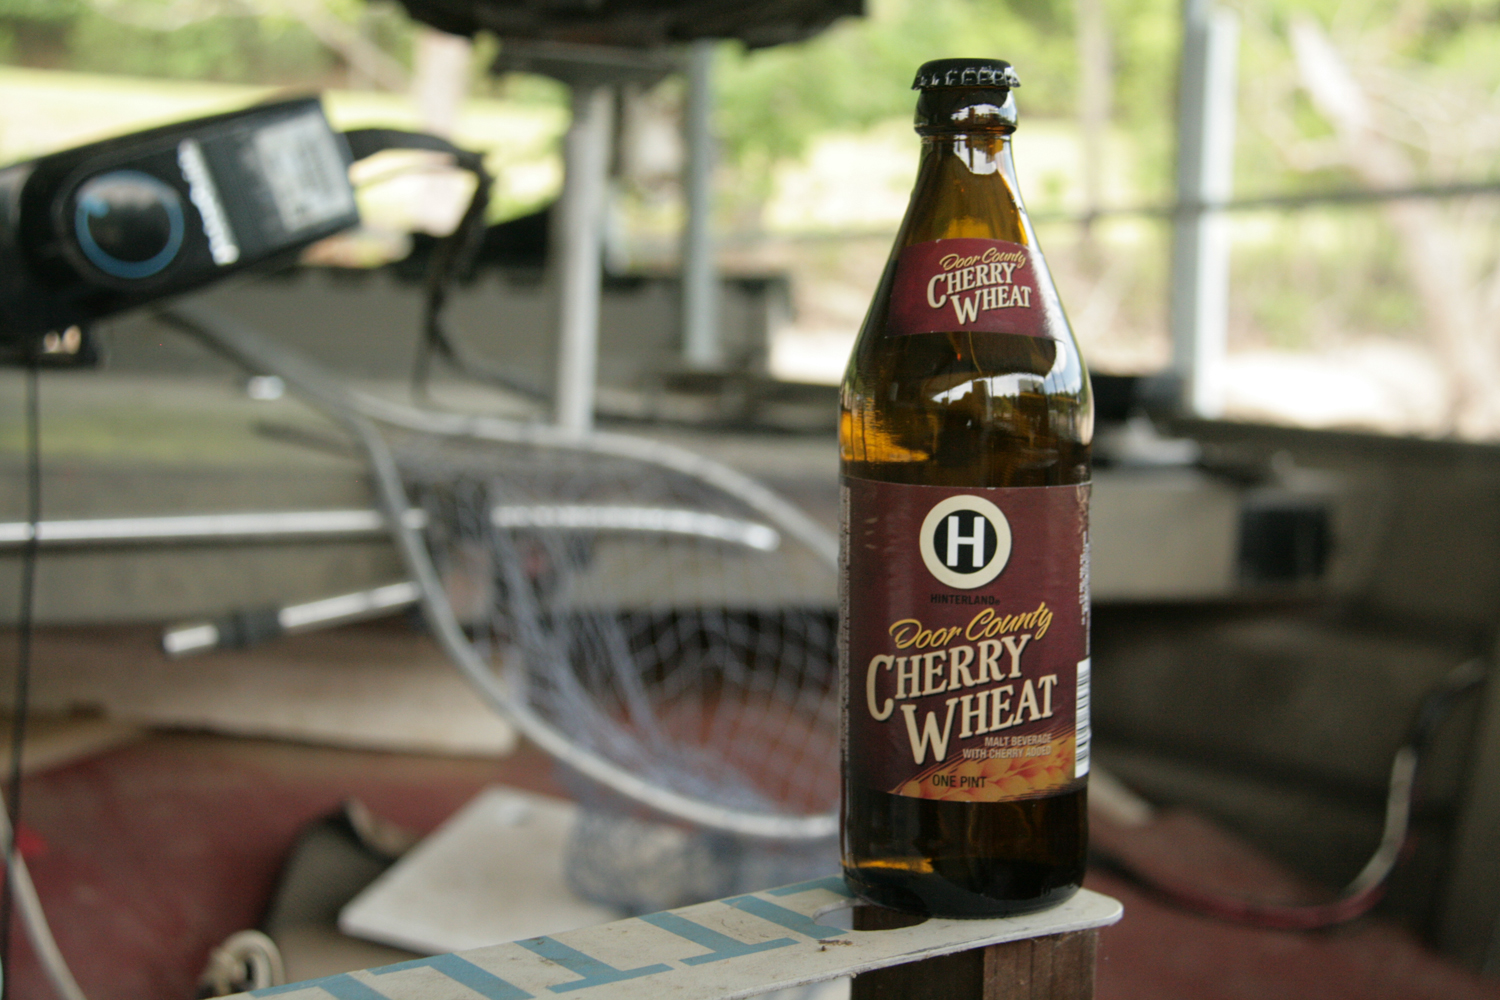 Enjoy Hinterland Summer Cherry beer this season.